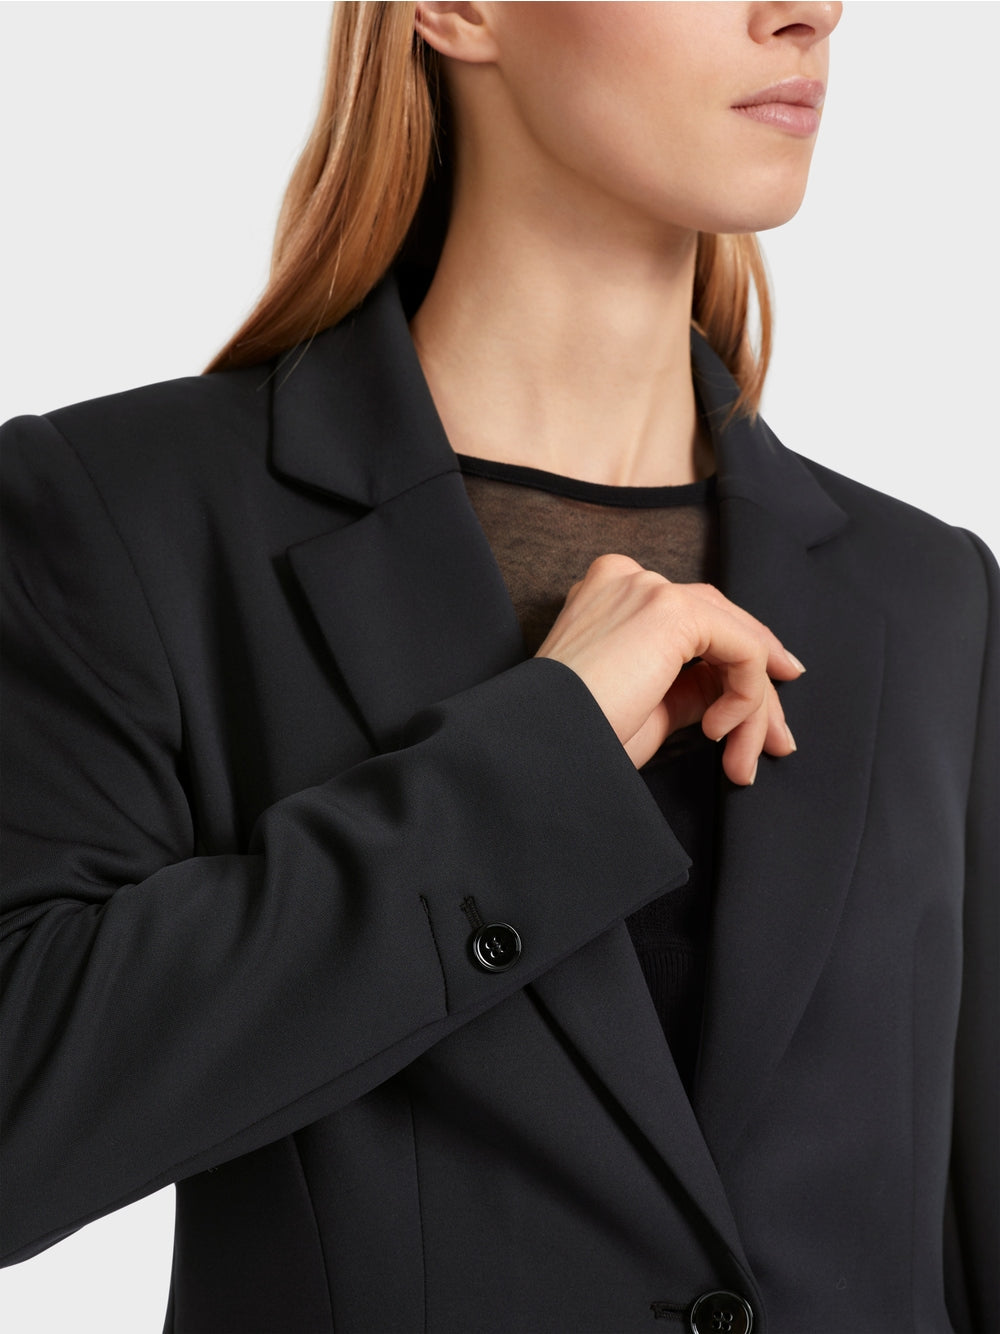 black feminine blazer